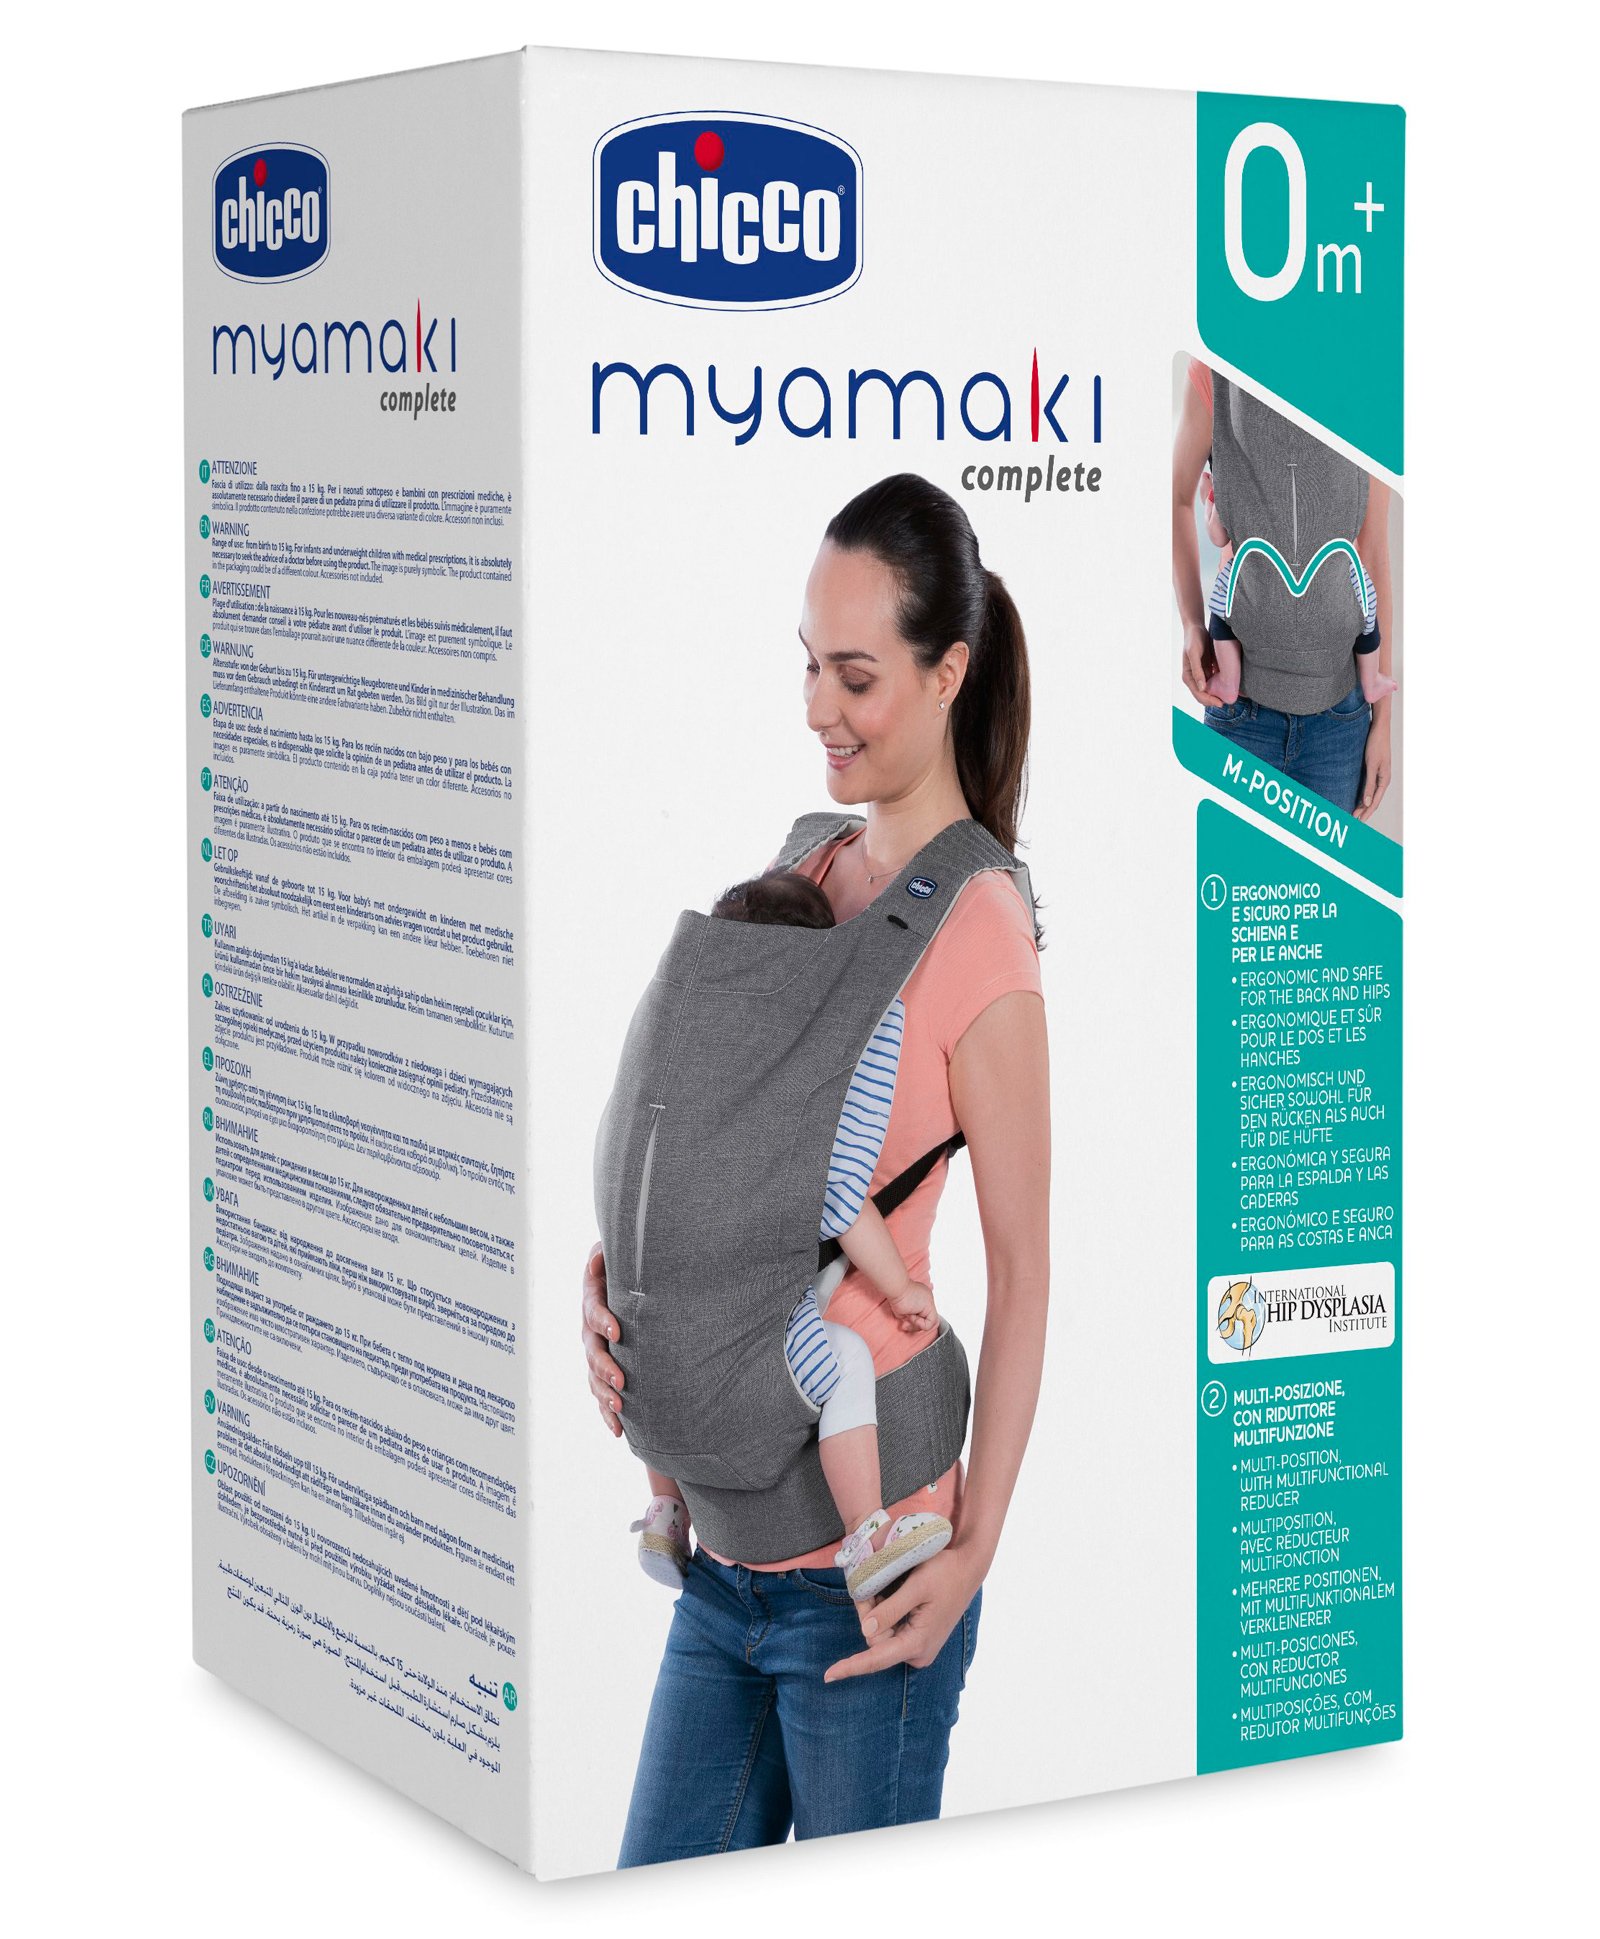 chicco myamaki baby carrier